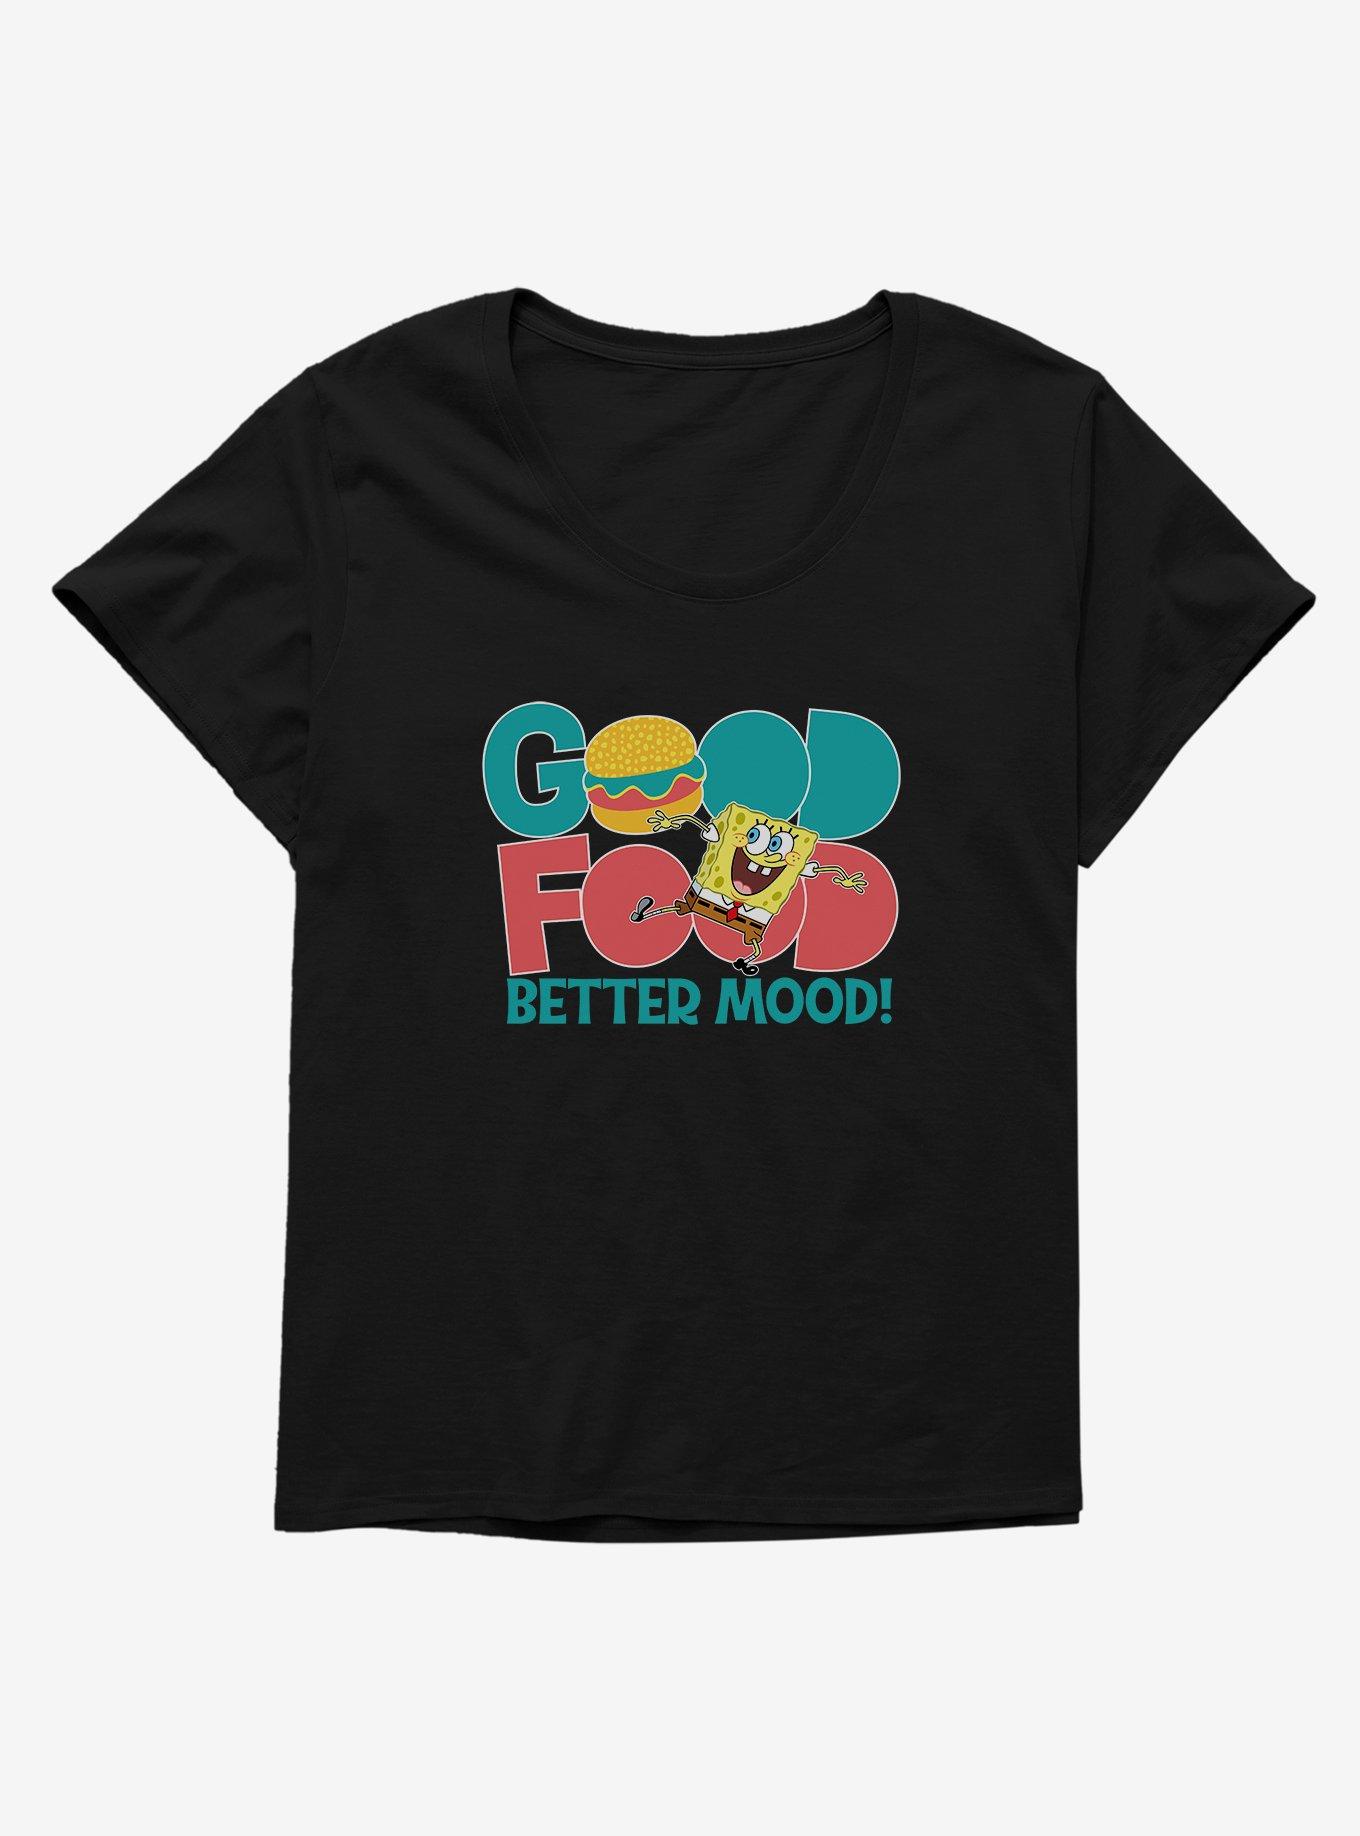 SpongeBob SquarePants Good Food Better Mood! Womens T-Shirt Plus Size, , hi-res